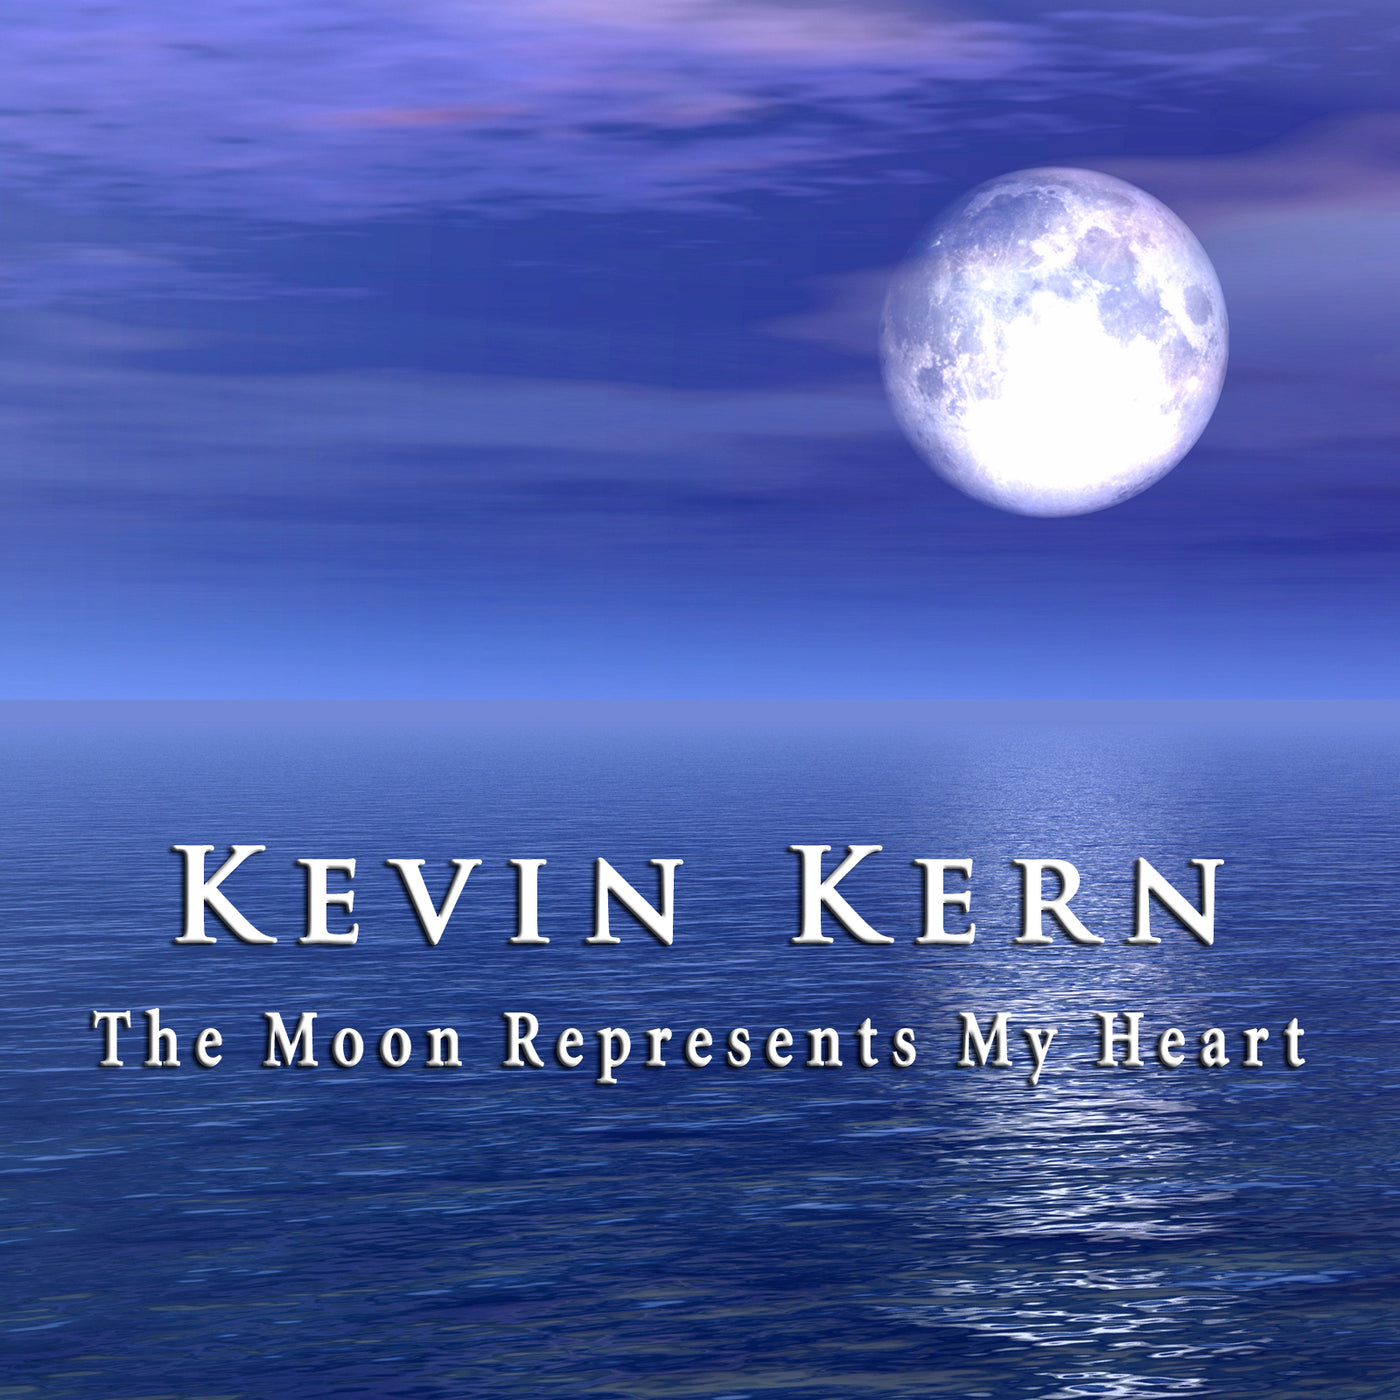 The Moon Represents My Heart, digital single cover art.